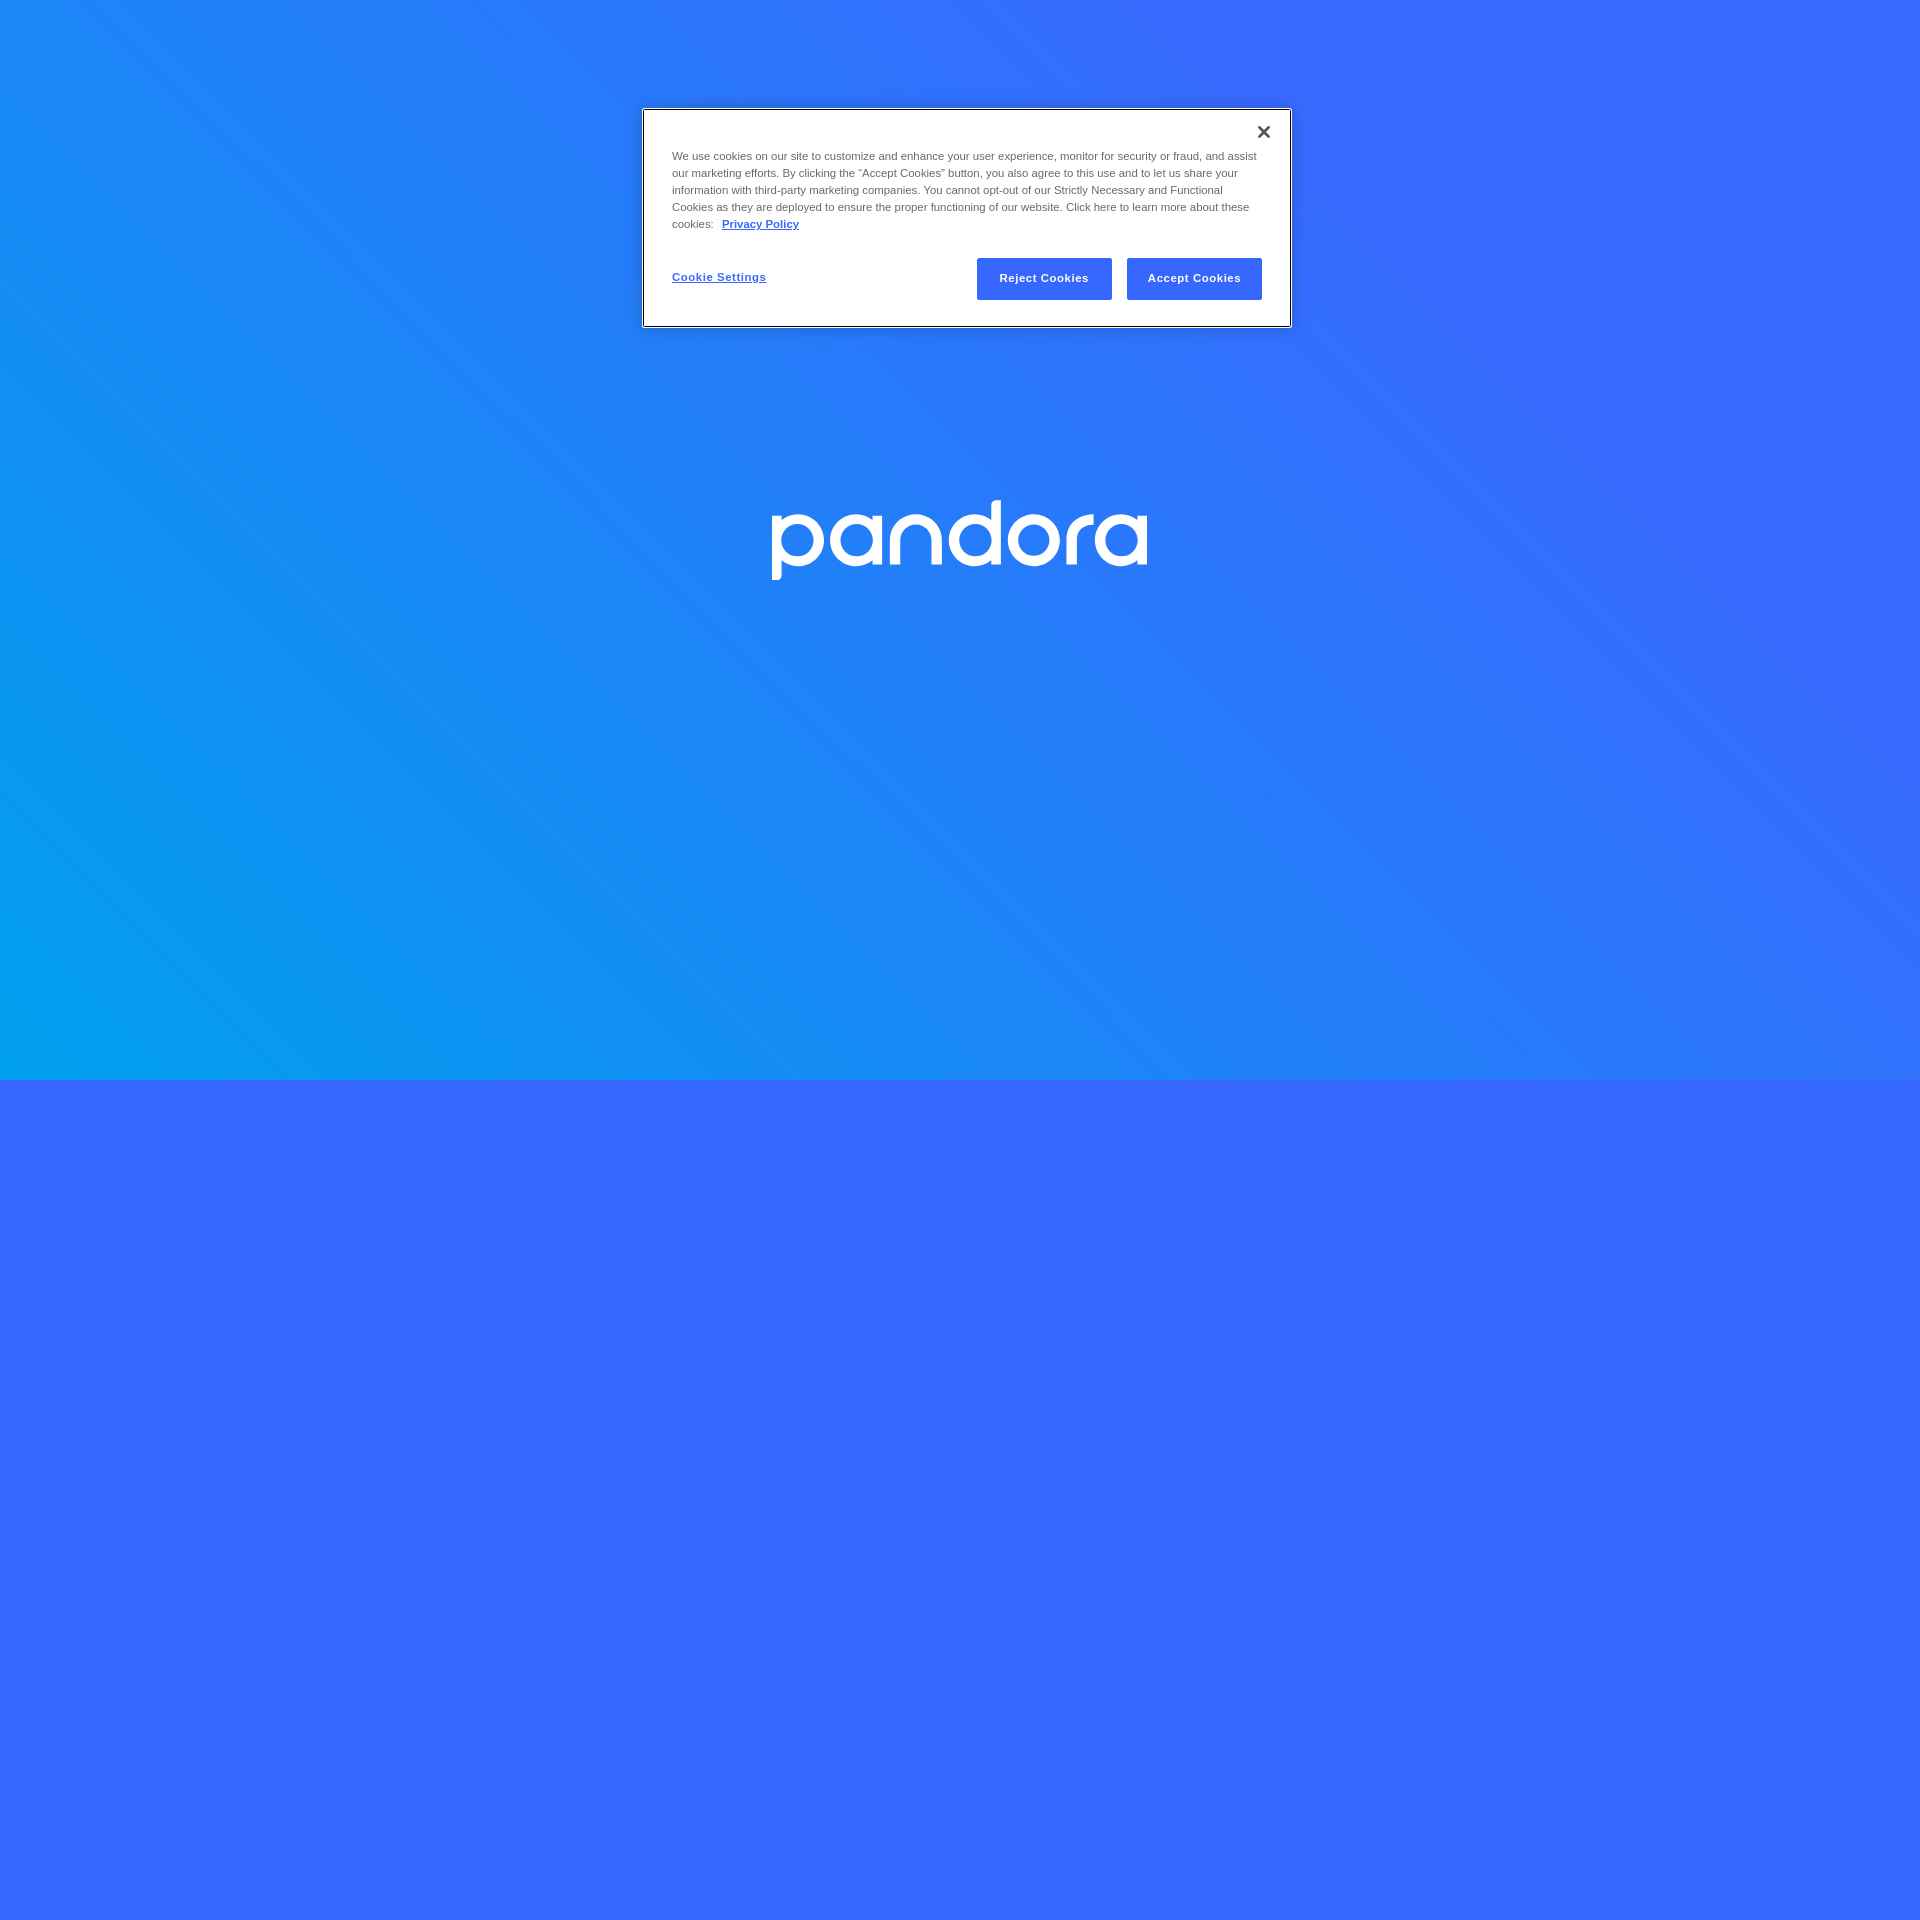 Pandora.com: Revolutionizing Personalized Music Streaming